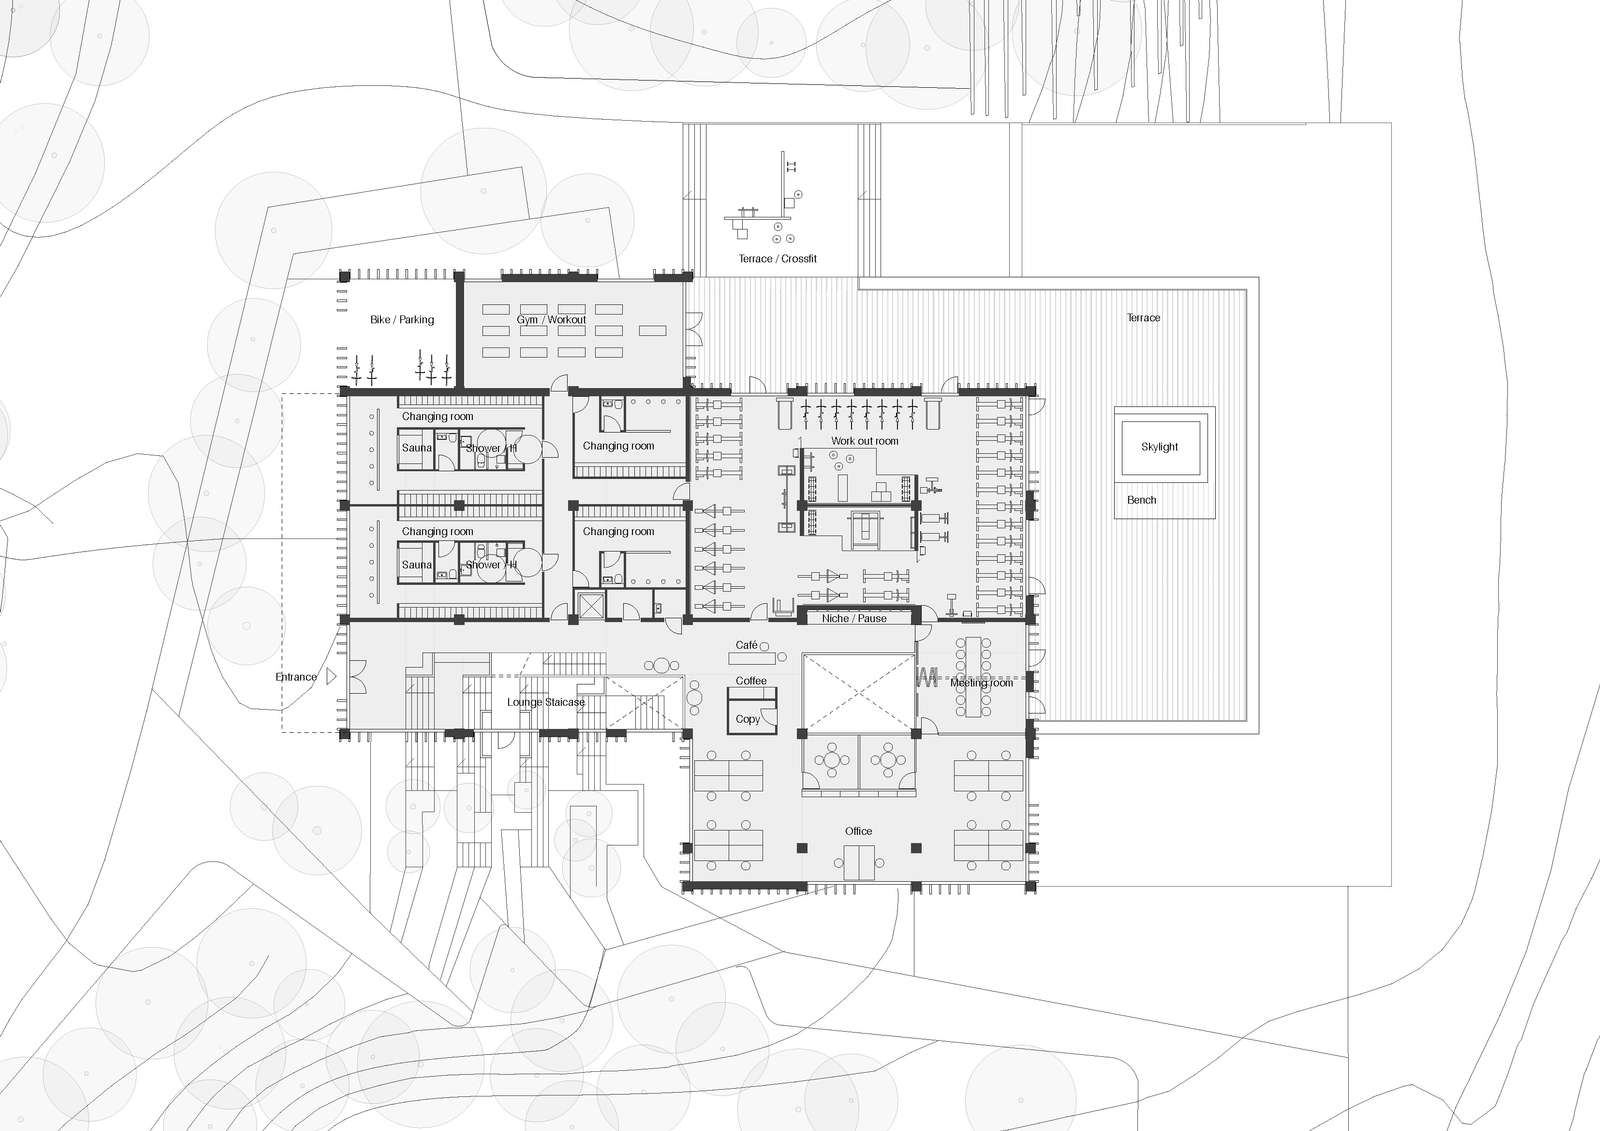 Denmark's Rowing Stadium Rowing Center plan 0 AART architects